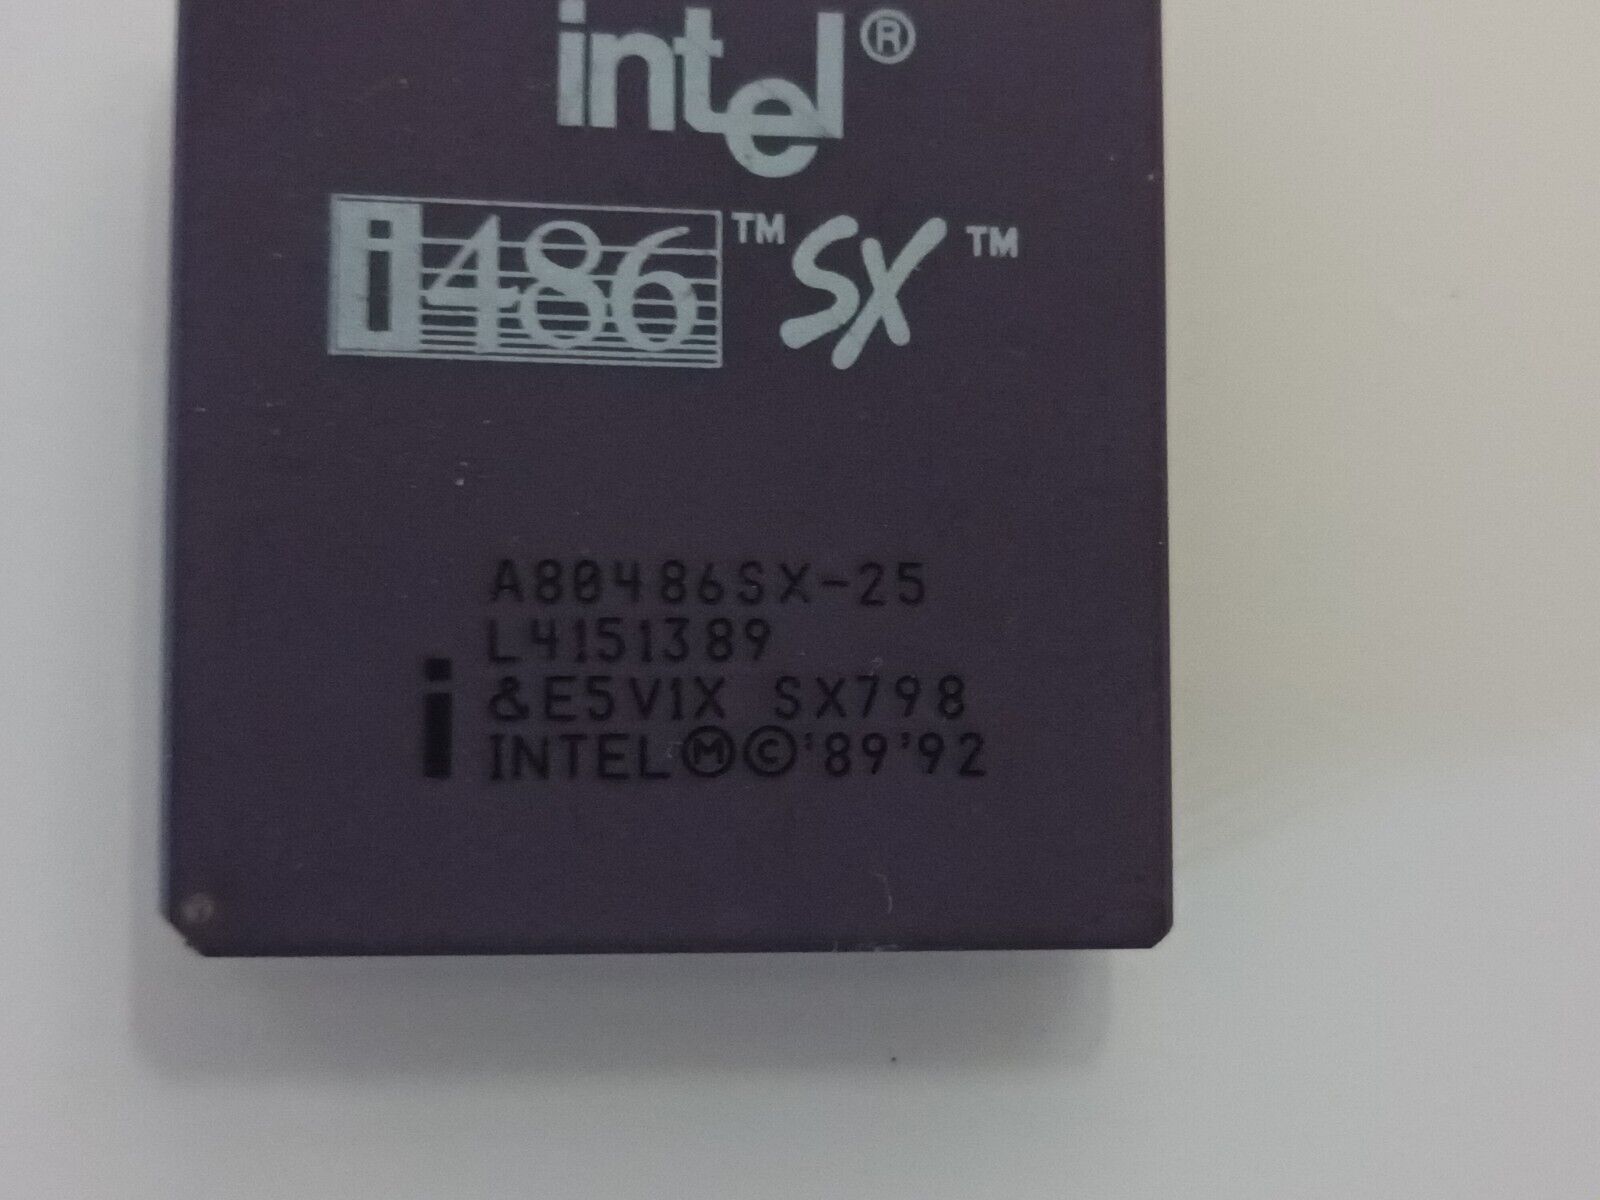 Vintage Rare Intel i486 SX A80486SX-25 SX798 Processor 